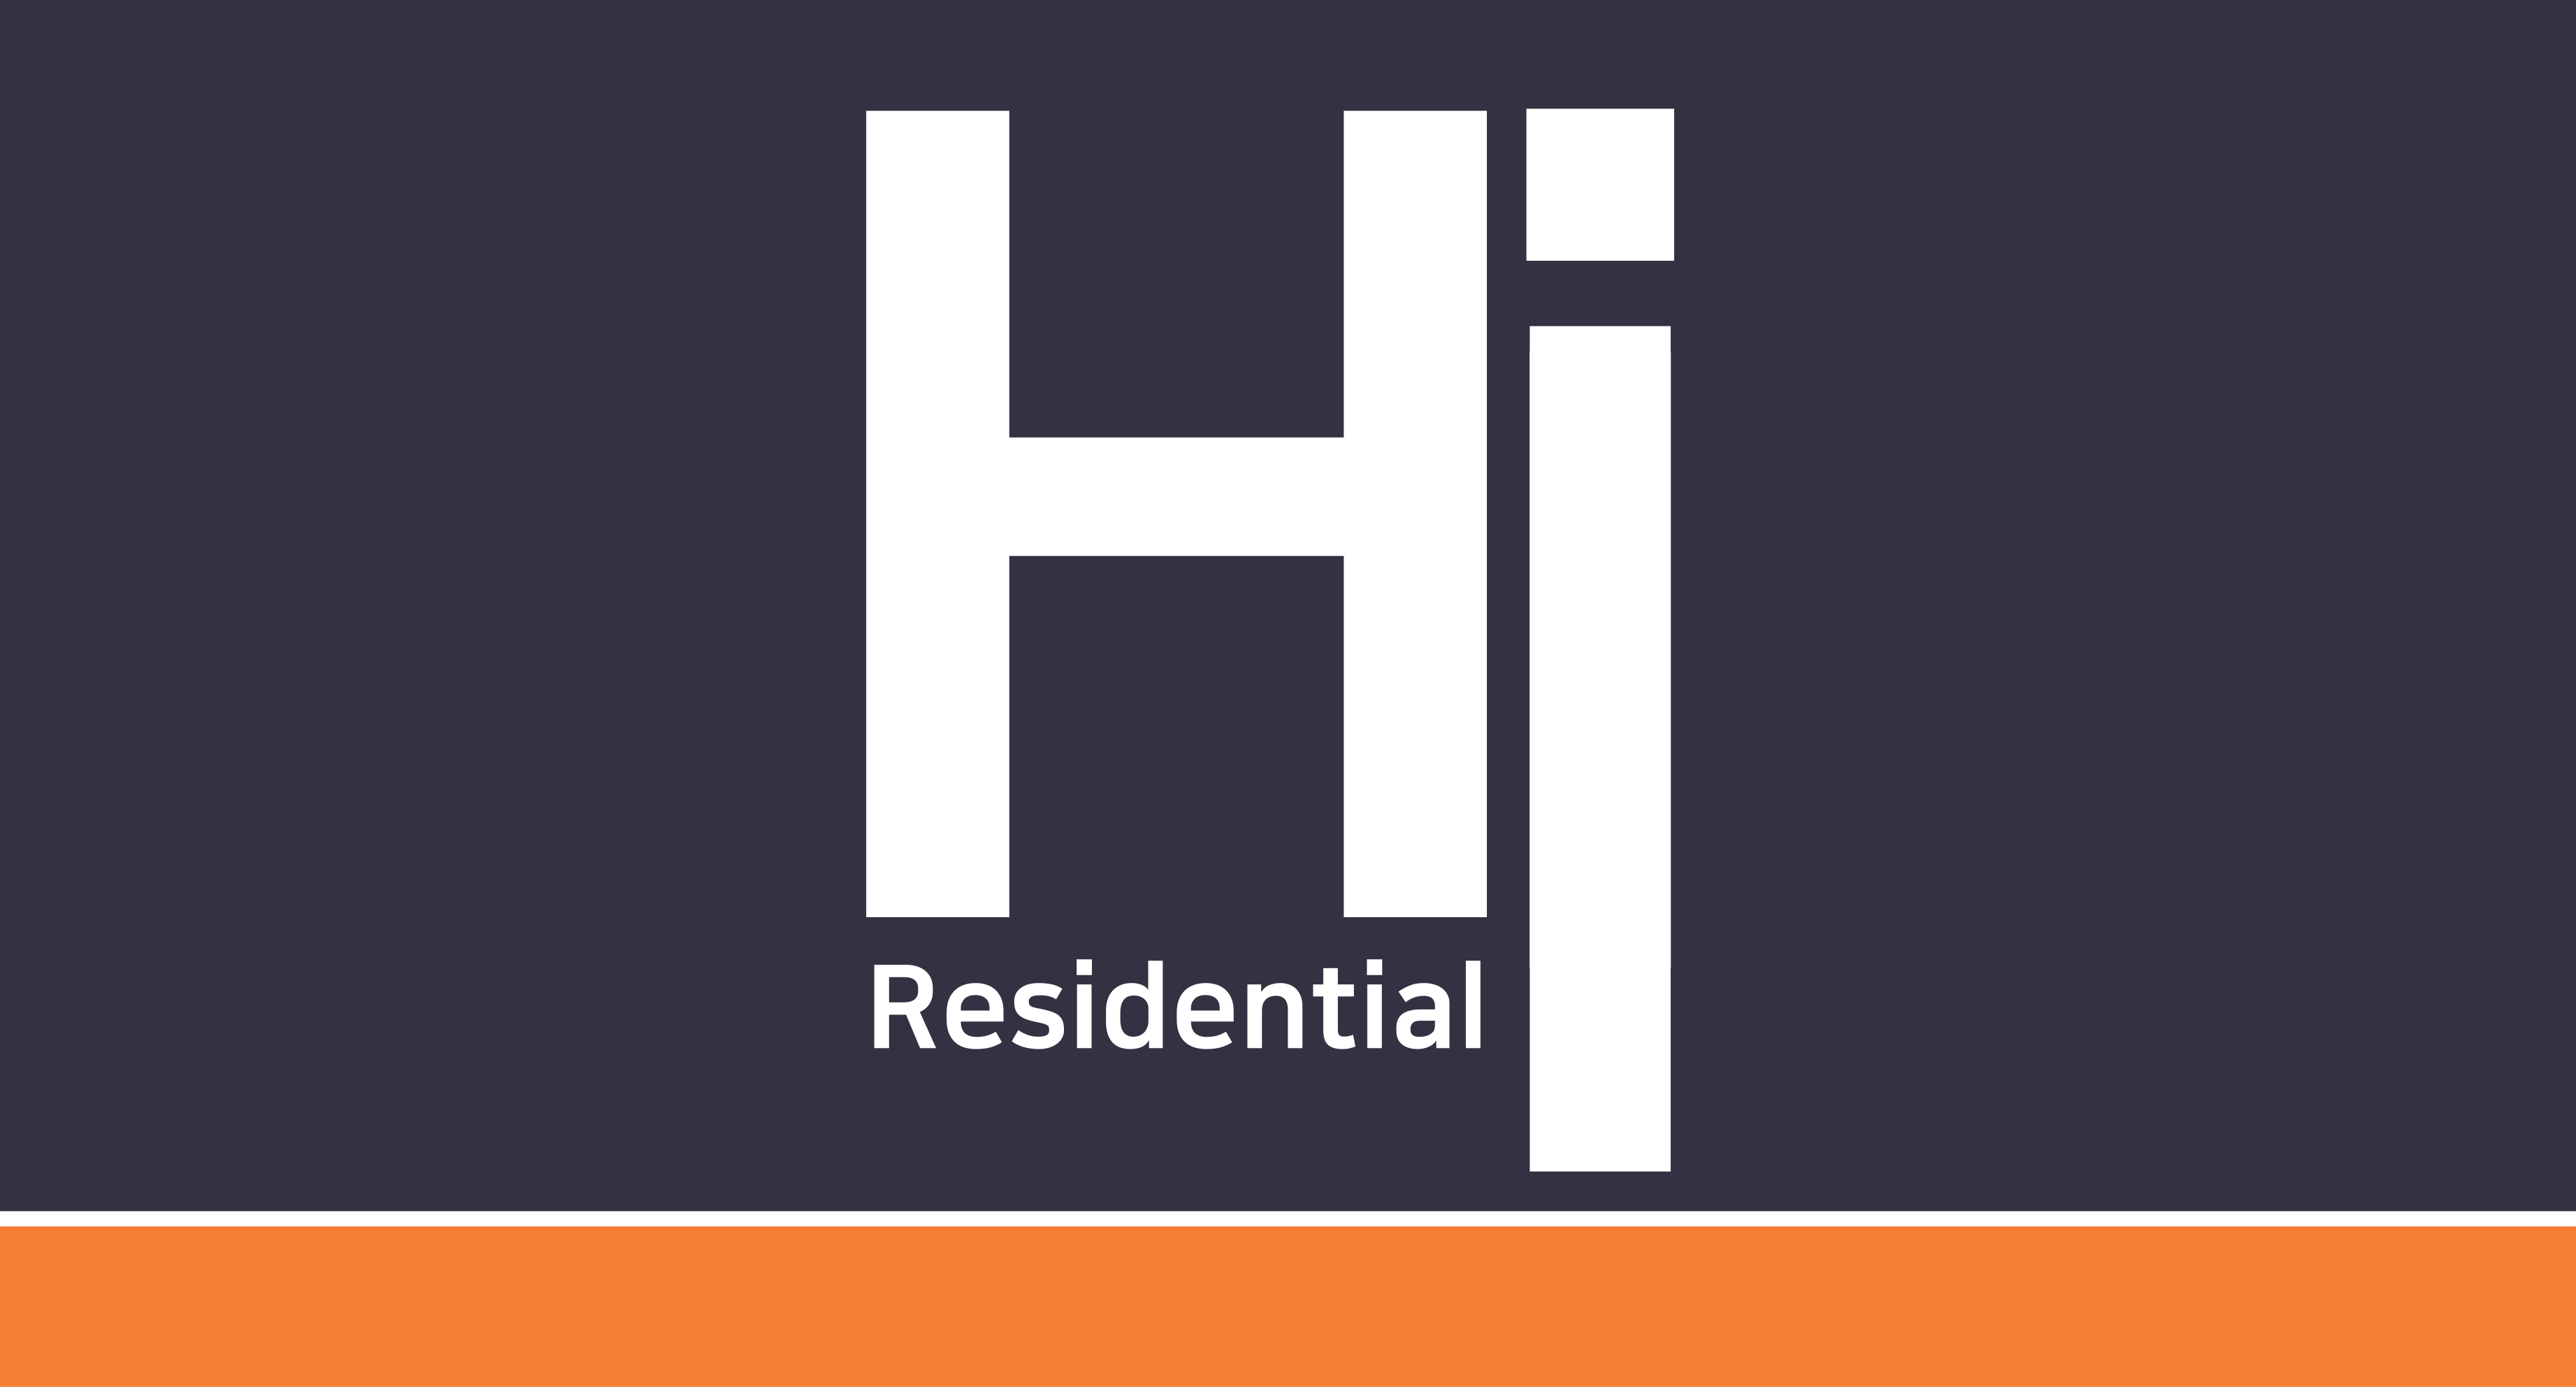 hi-residential